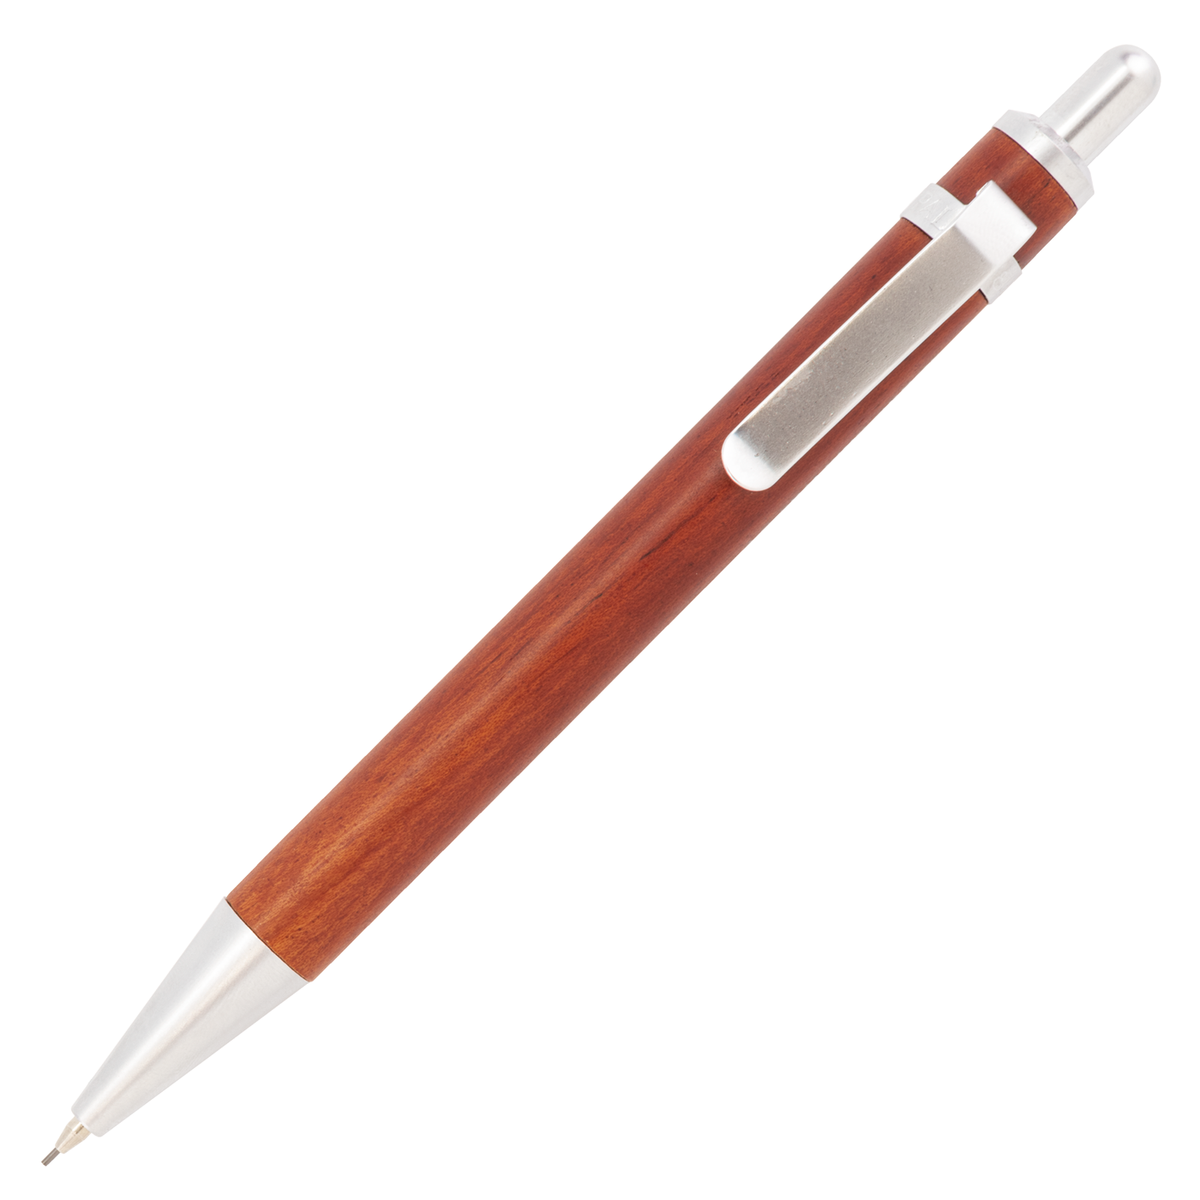 Spalding Pencil- Cherry Wood